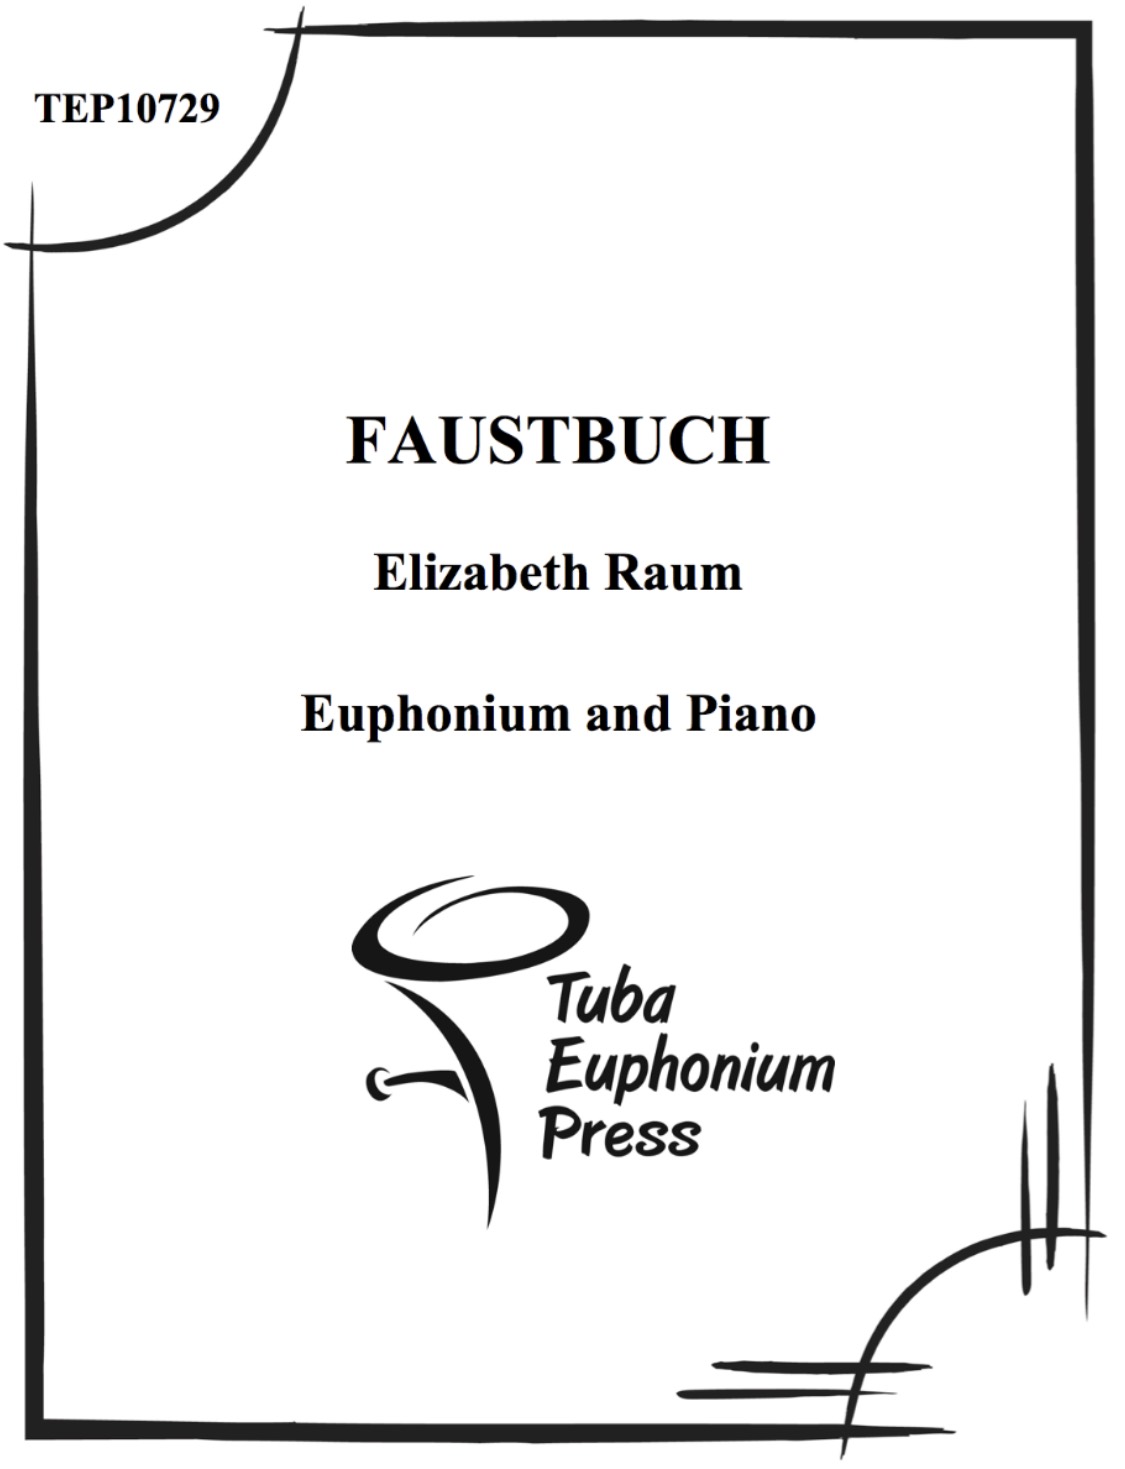 Faustbuch - Elizabeth Raum - Euphonium and Piano